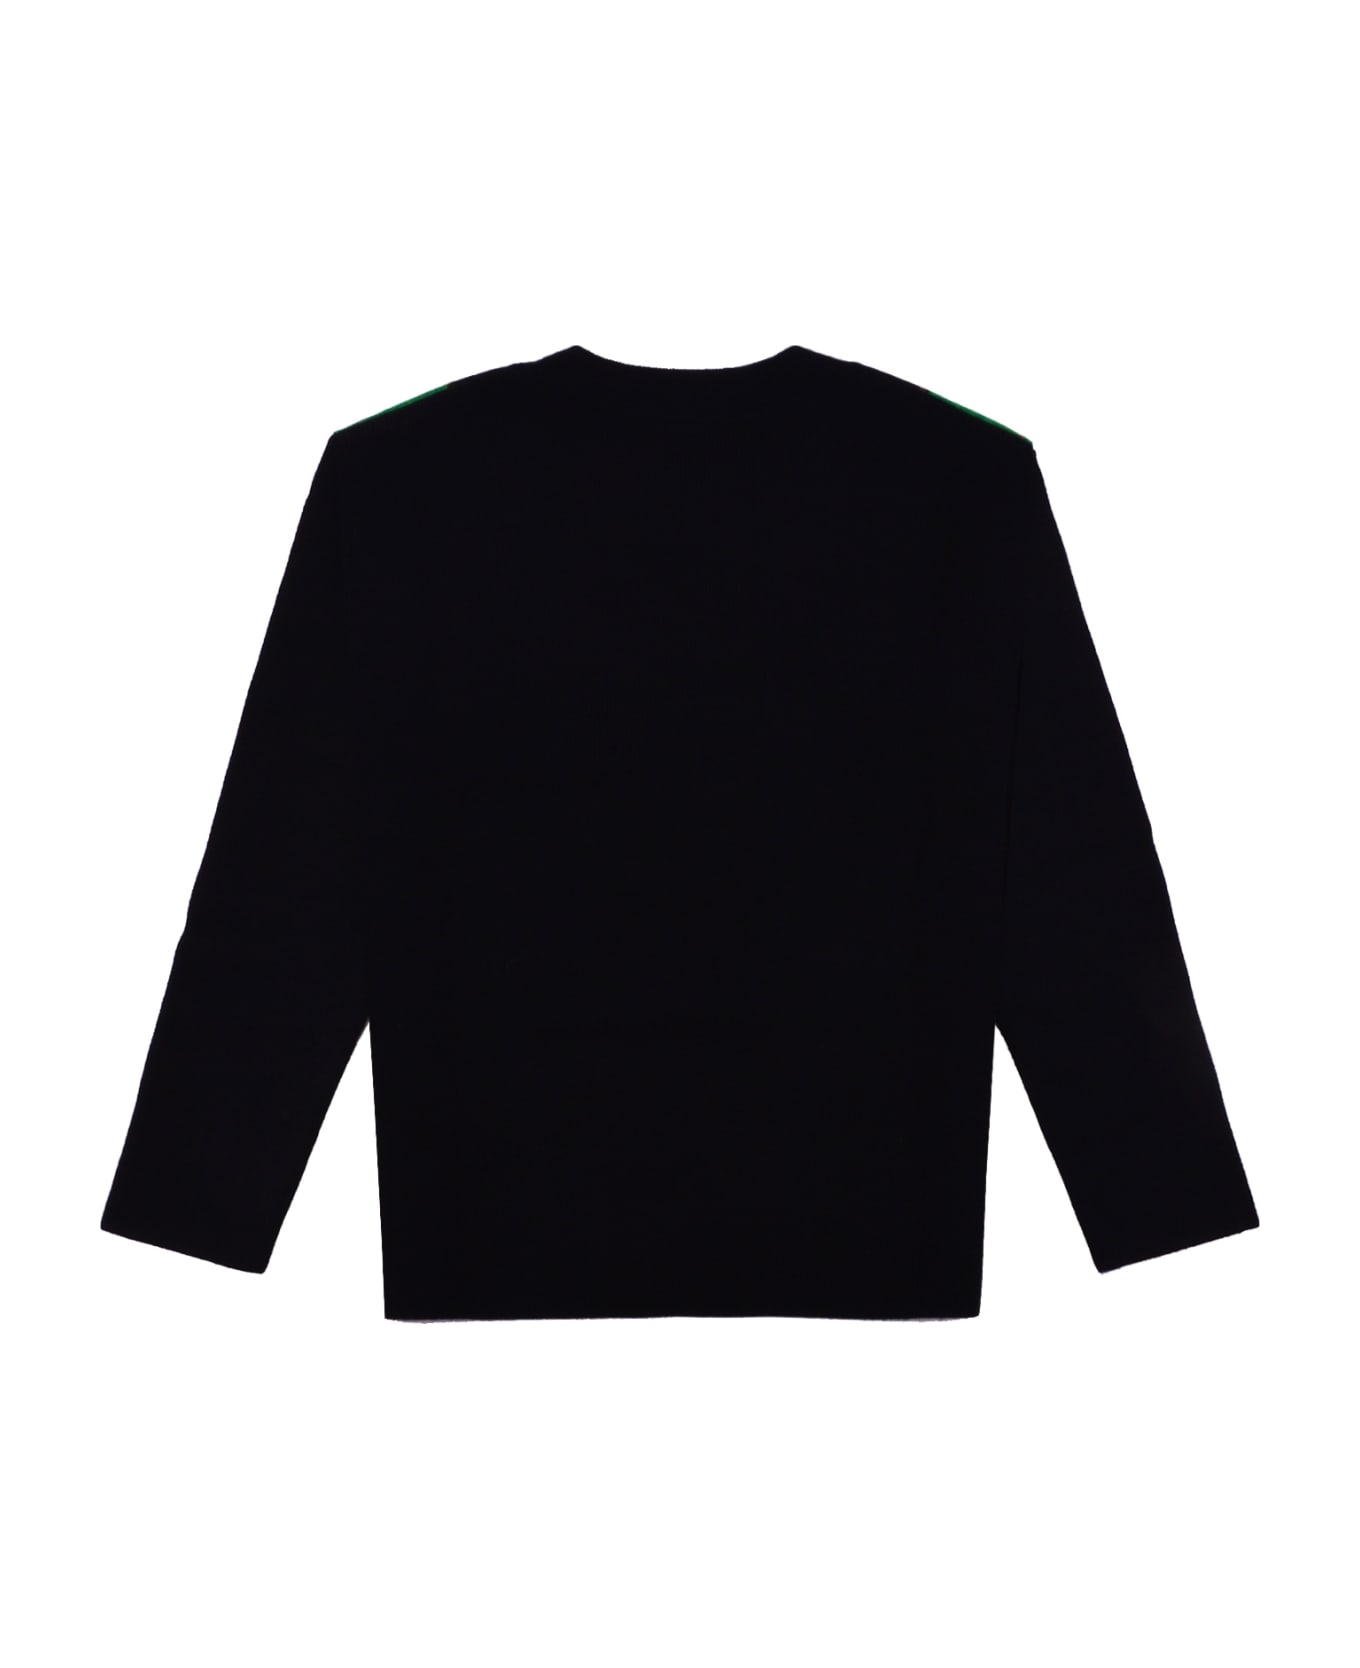 Burberry Thomas Bear Rhombus Sweater - Green